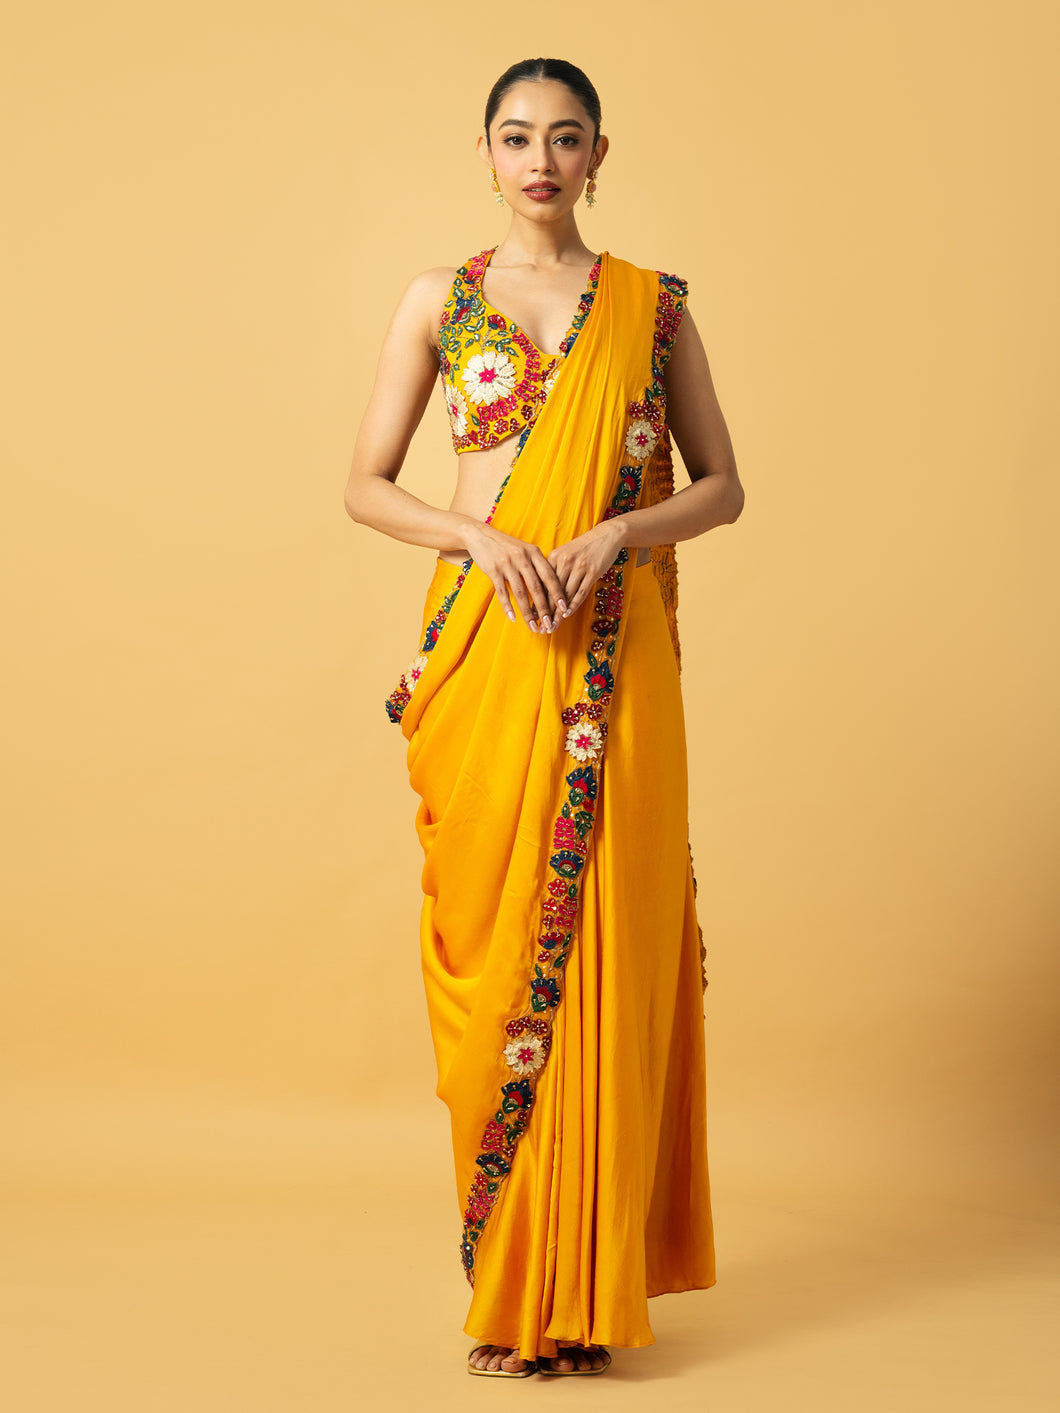 Golden yellow modal satin saree with multi coloured 3D work on blouse and saree edge